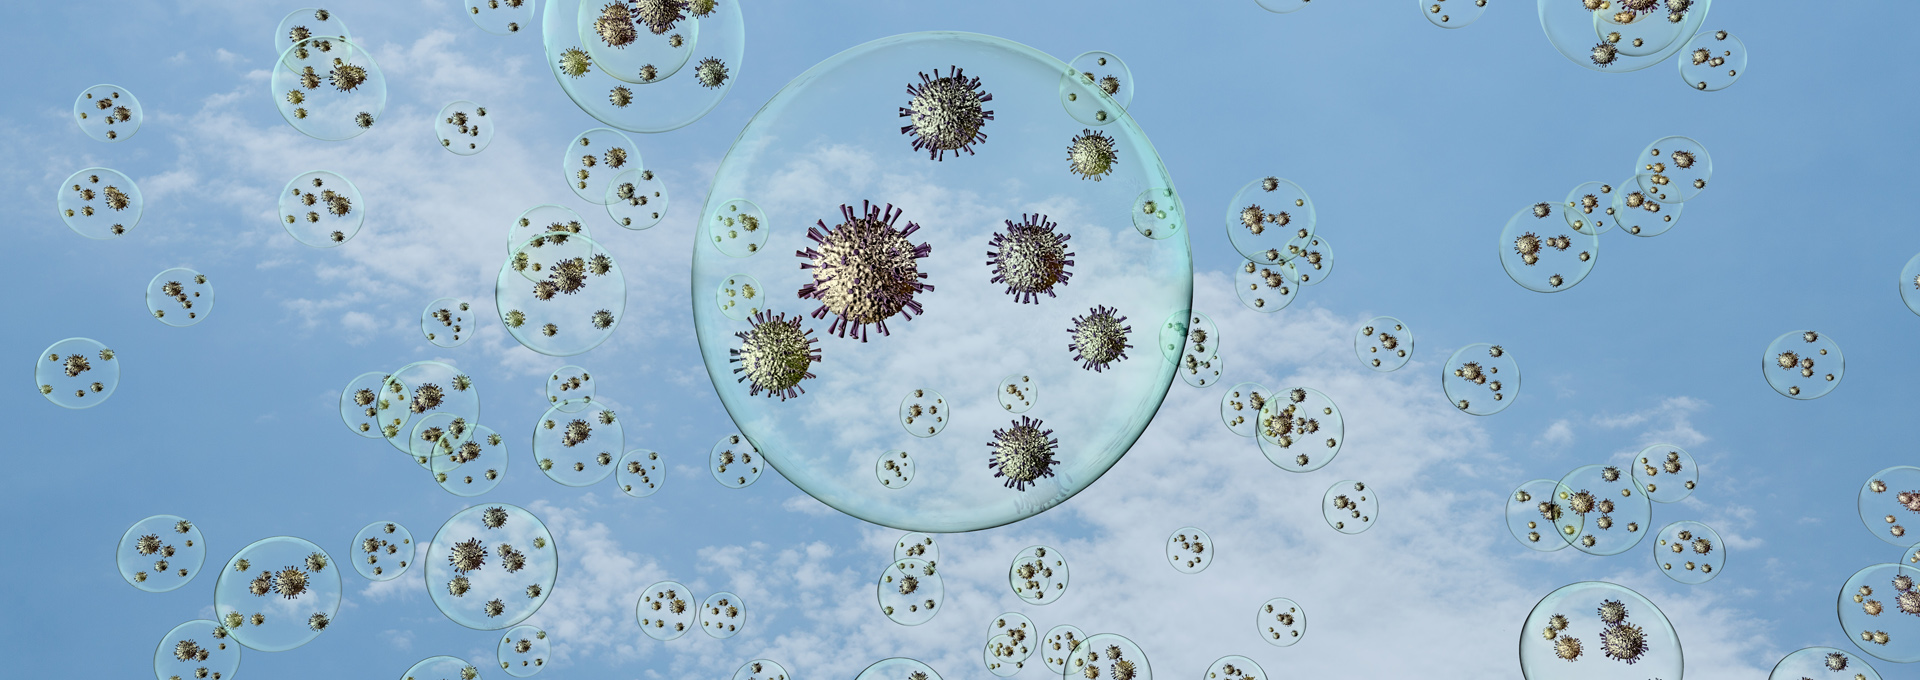 COVID-19重点关注空气病毒和病原微生物检测方法